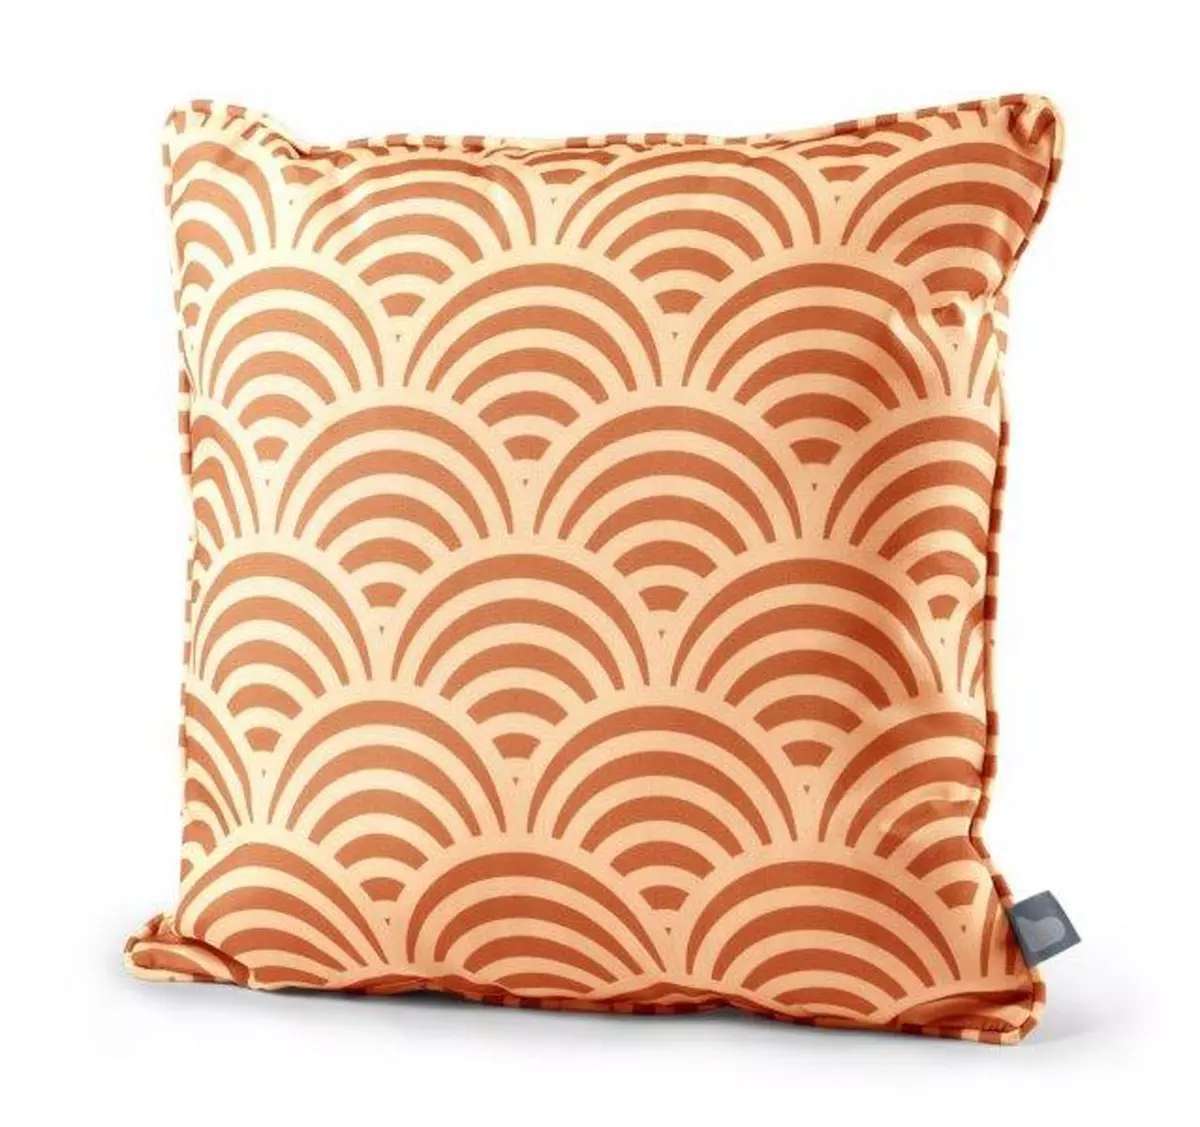 Splash-proof Cushion - Shell Orange